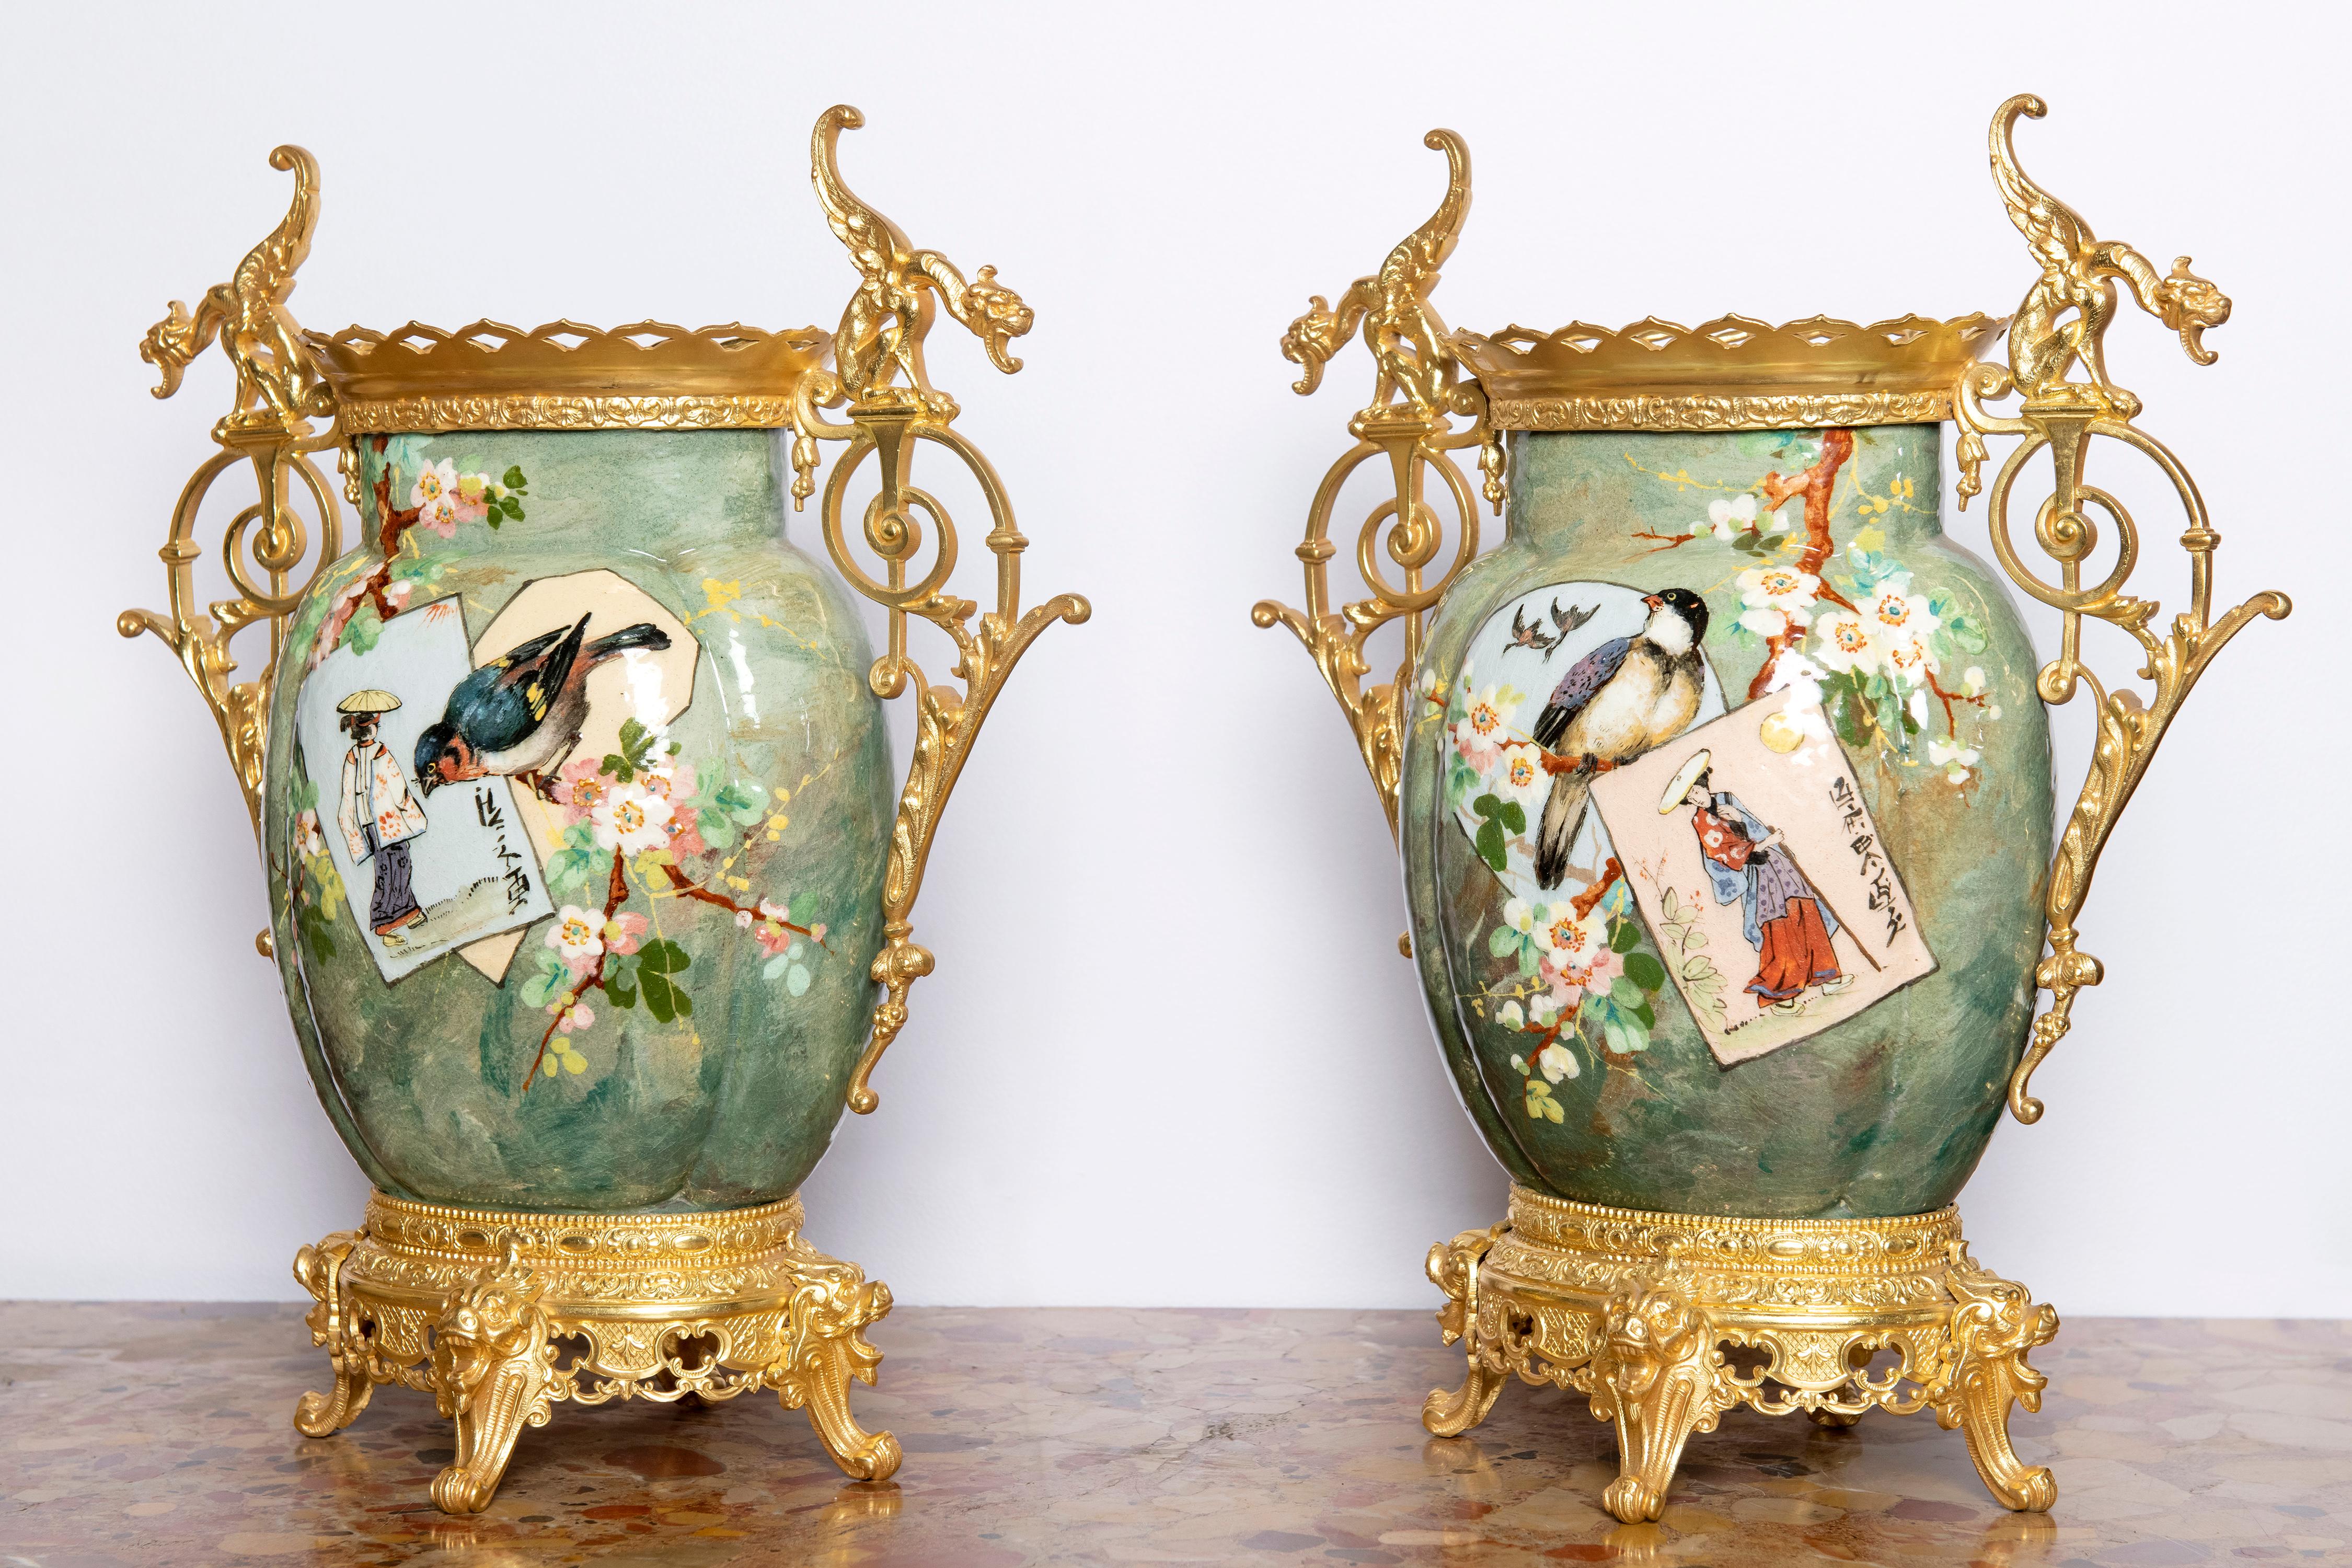 Pair of glazed ceramic and gilt bronze vases, France, late 19th century.